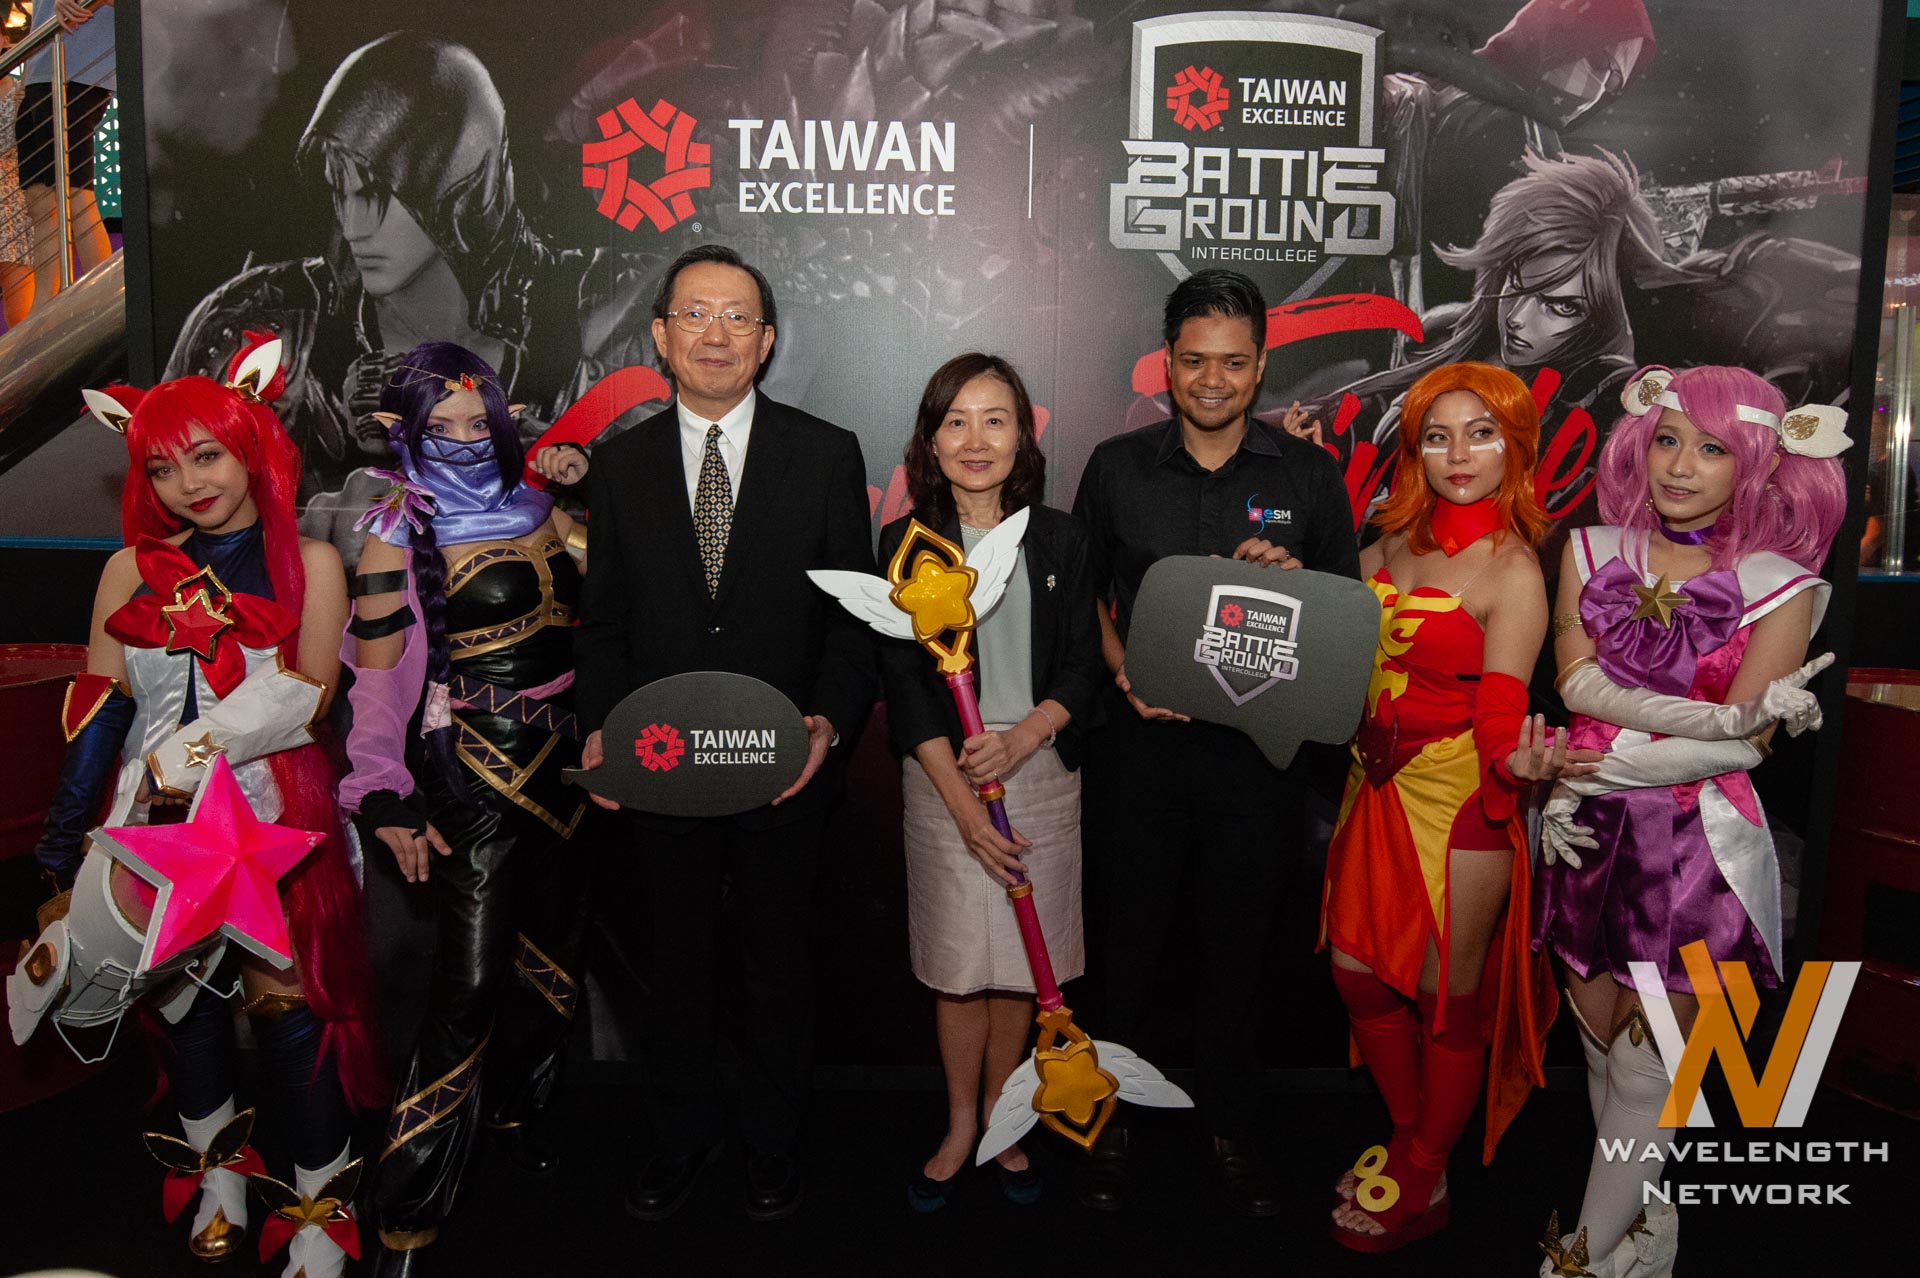 Taiwan Excellence Intercollege Battleground 3-days Grand Finale 2